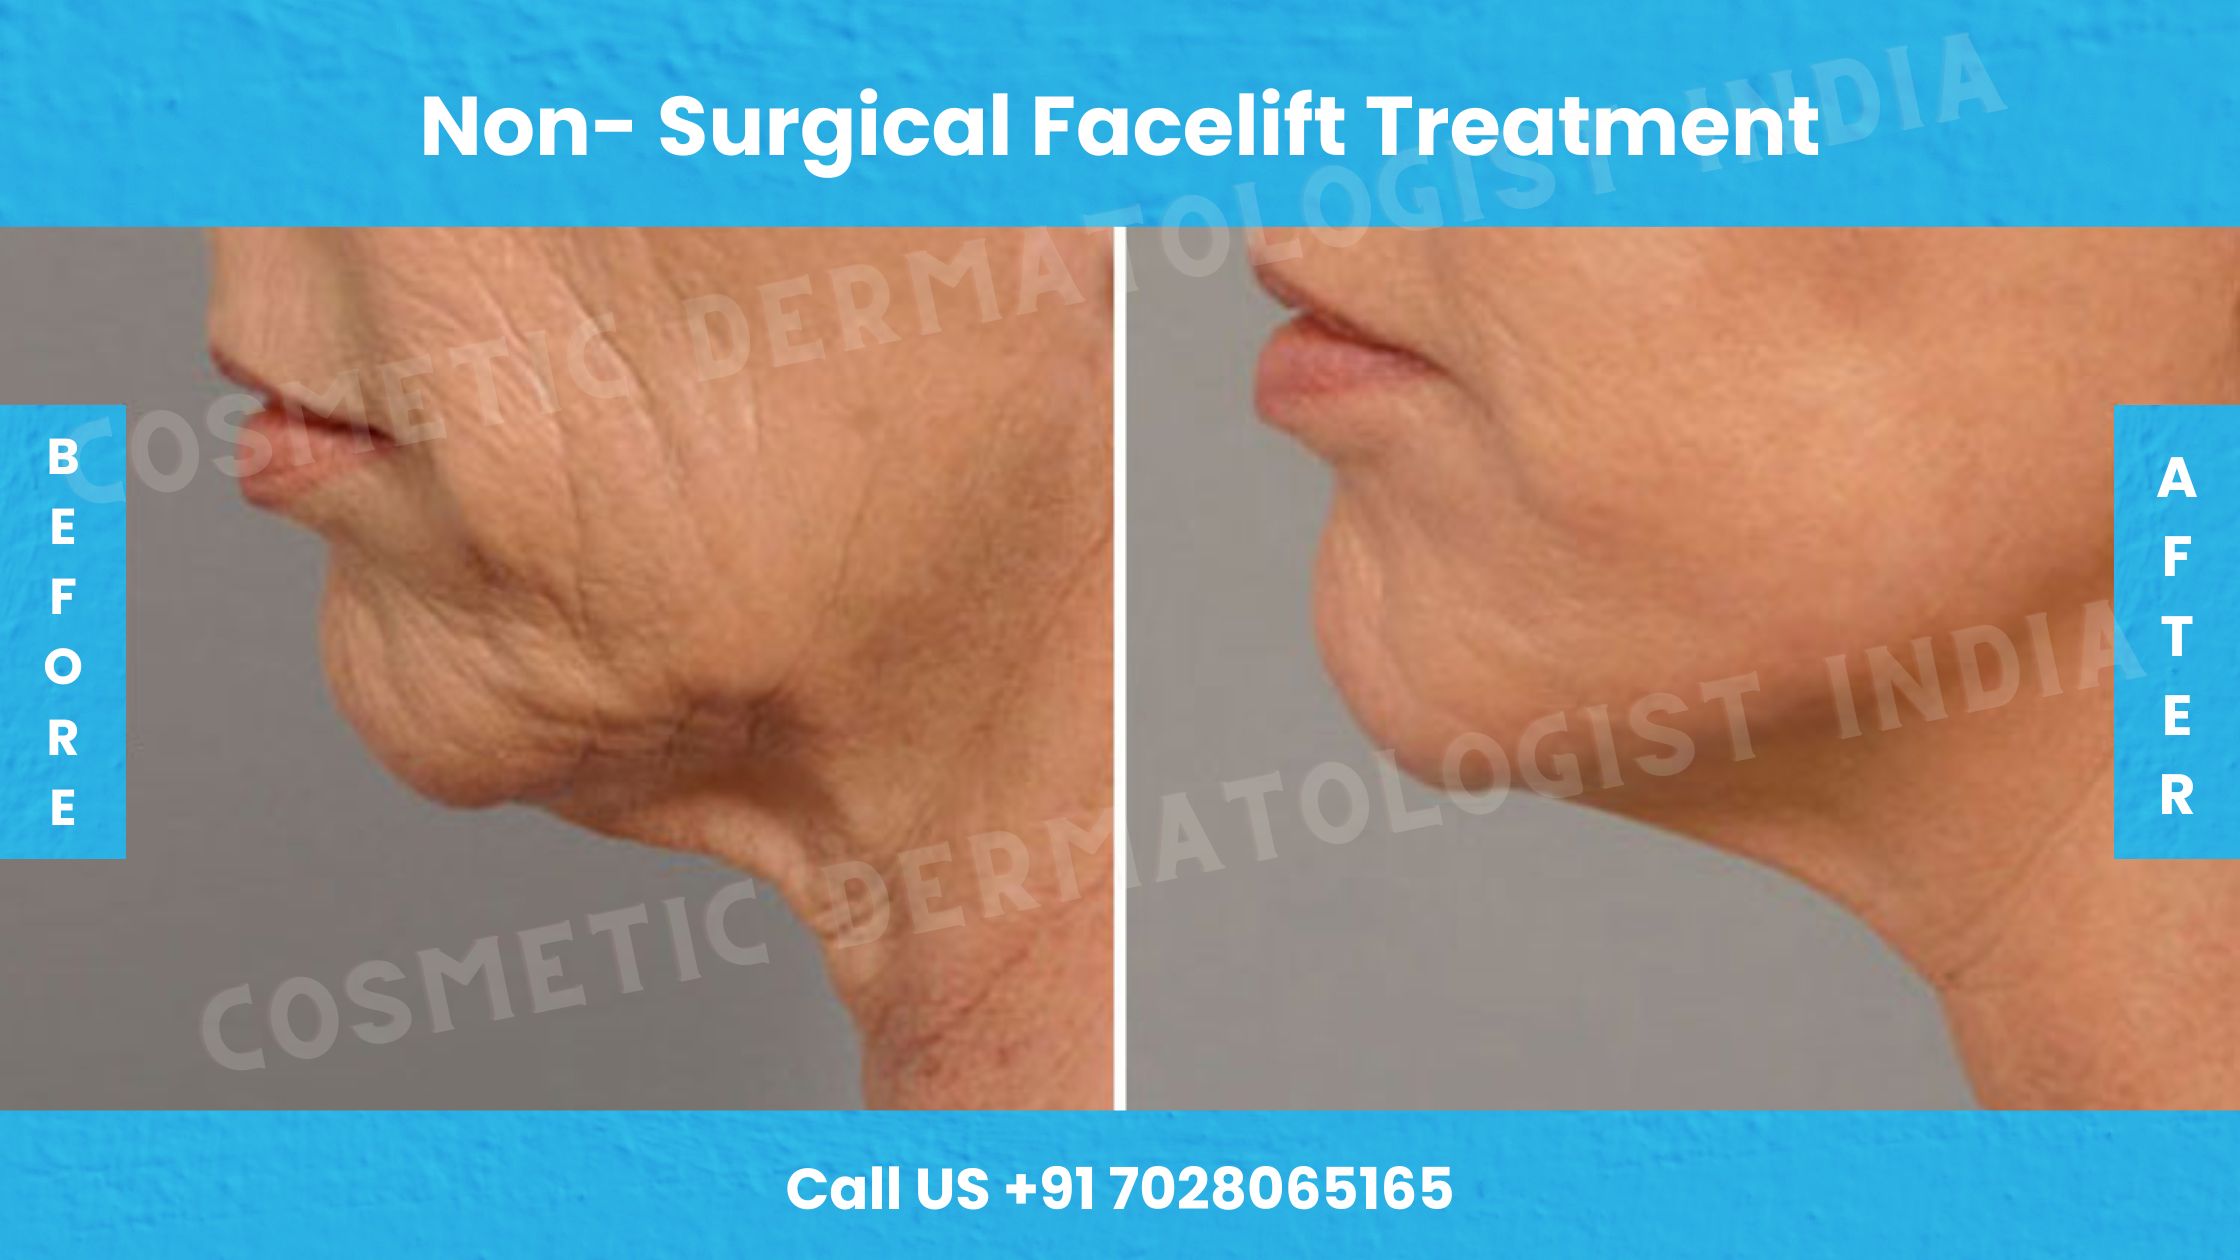 Non-Surgical Facelift Treatment Mumbai- Facelift Treatment, Cost